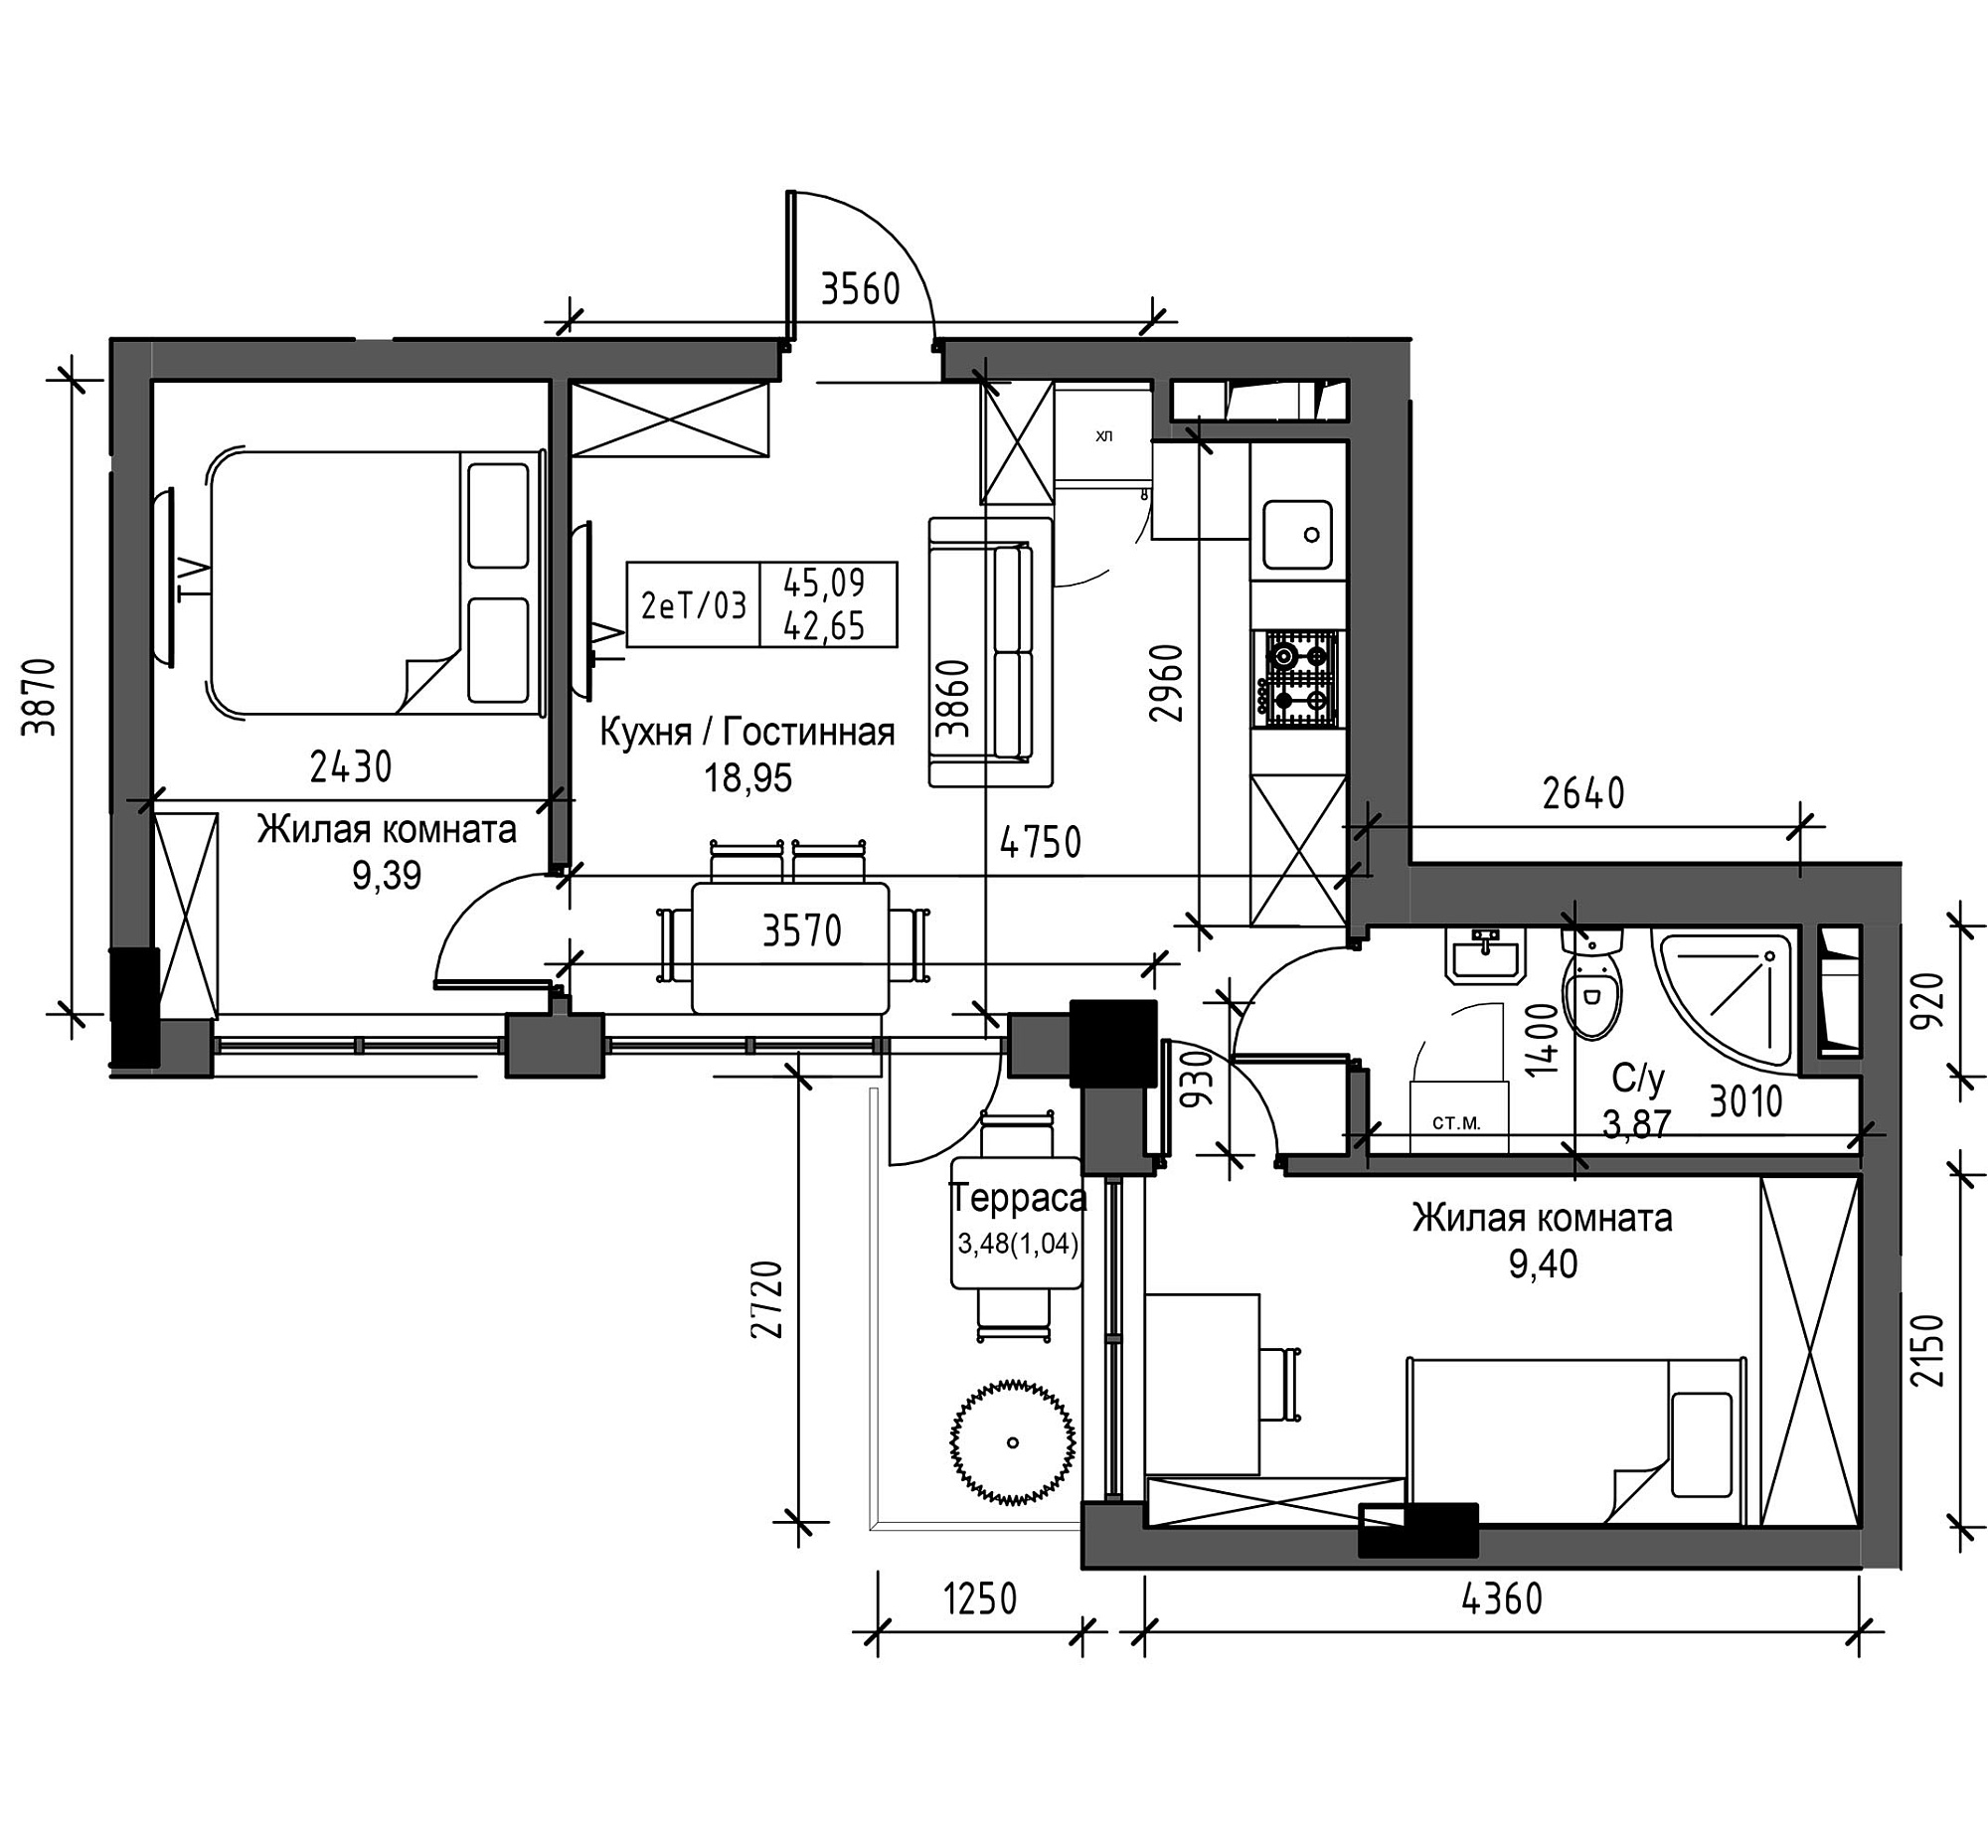 Планування 2-к квартира площею 42.65м2, UM-003-03/0012.